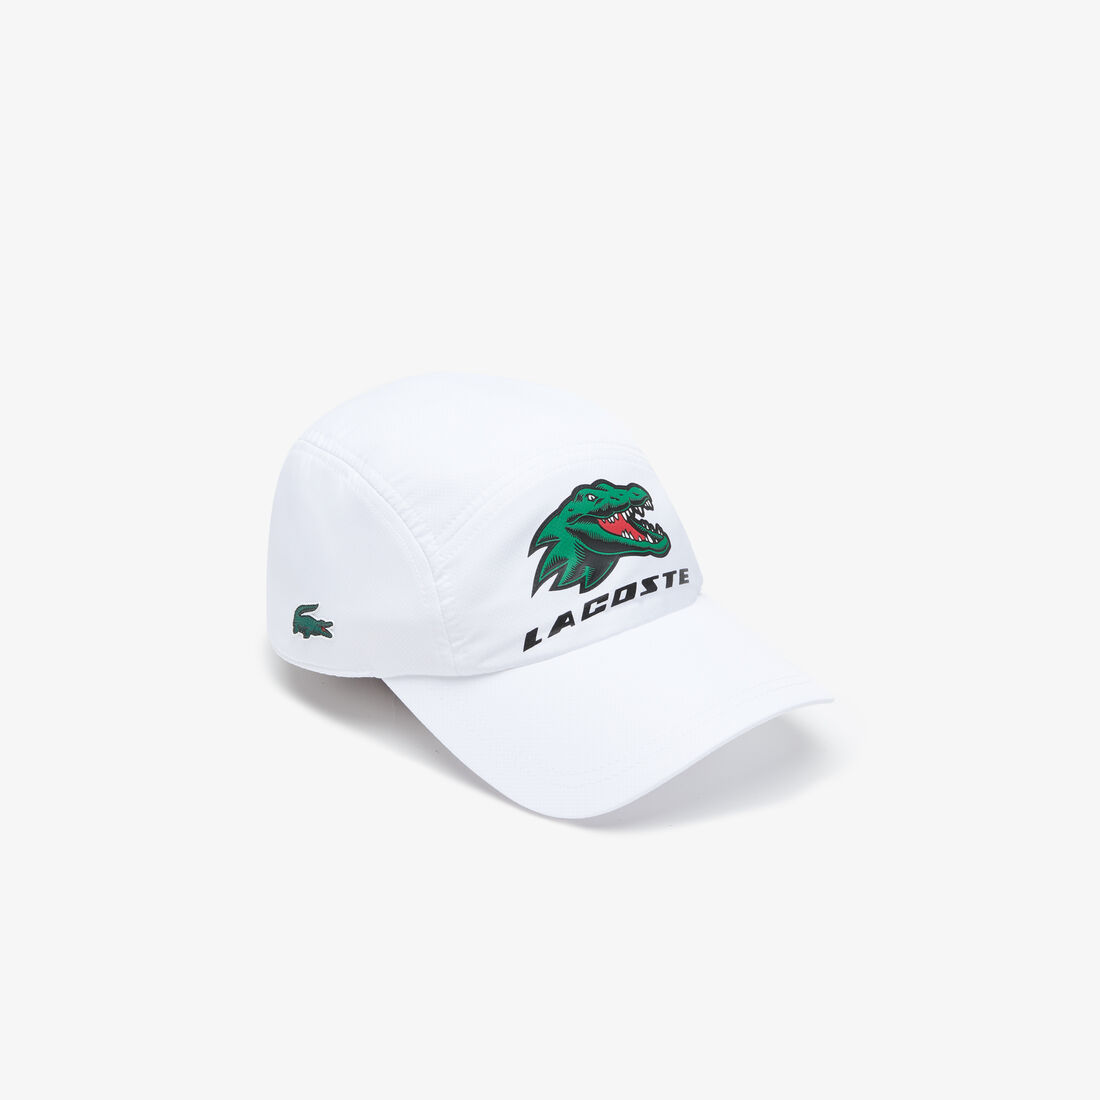 Lacoste Hats Cheapest - USA Lacoste Sale Online